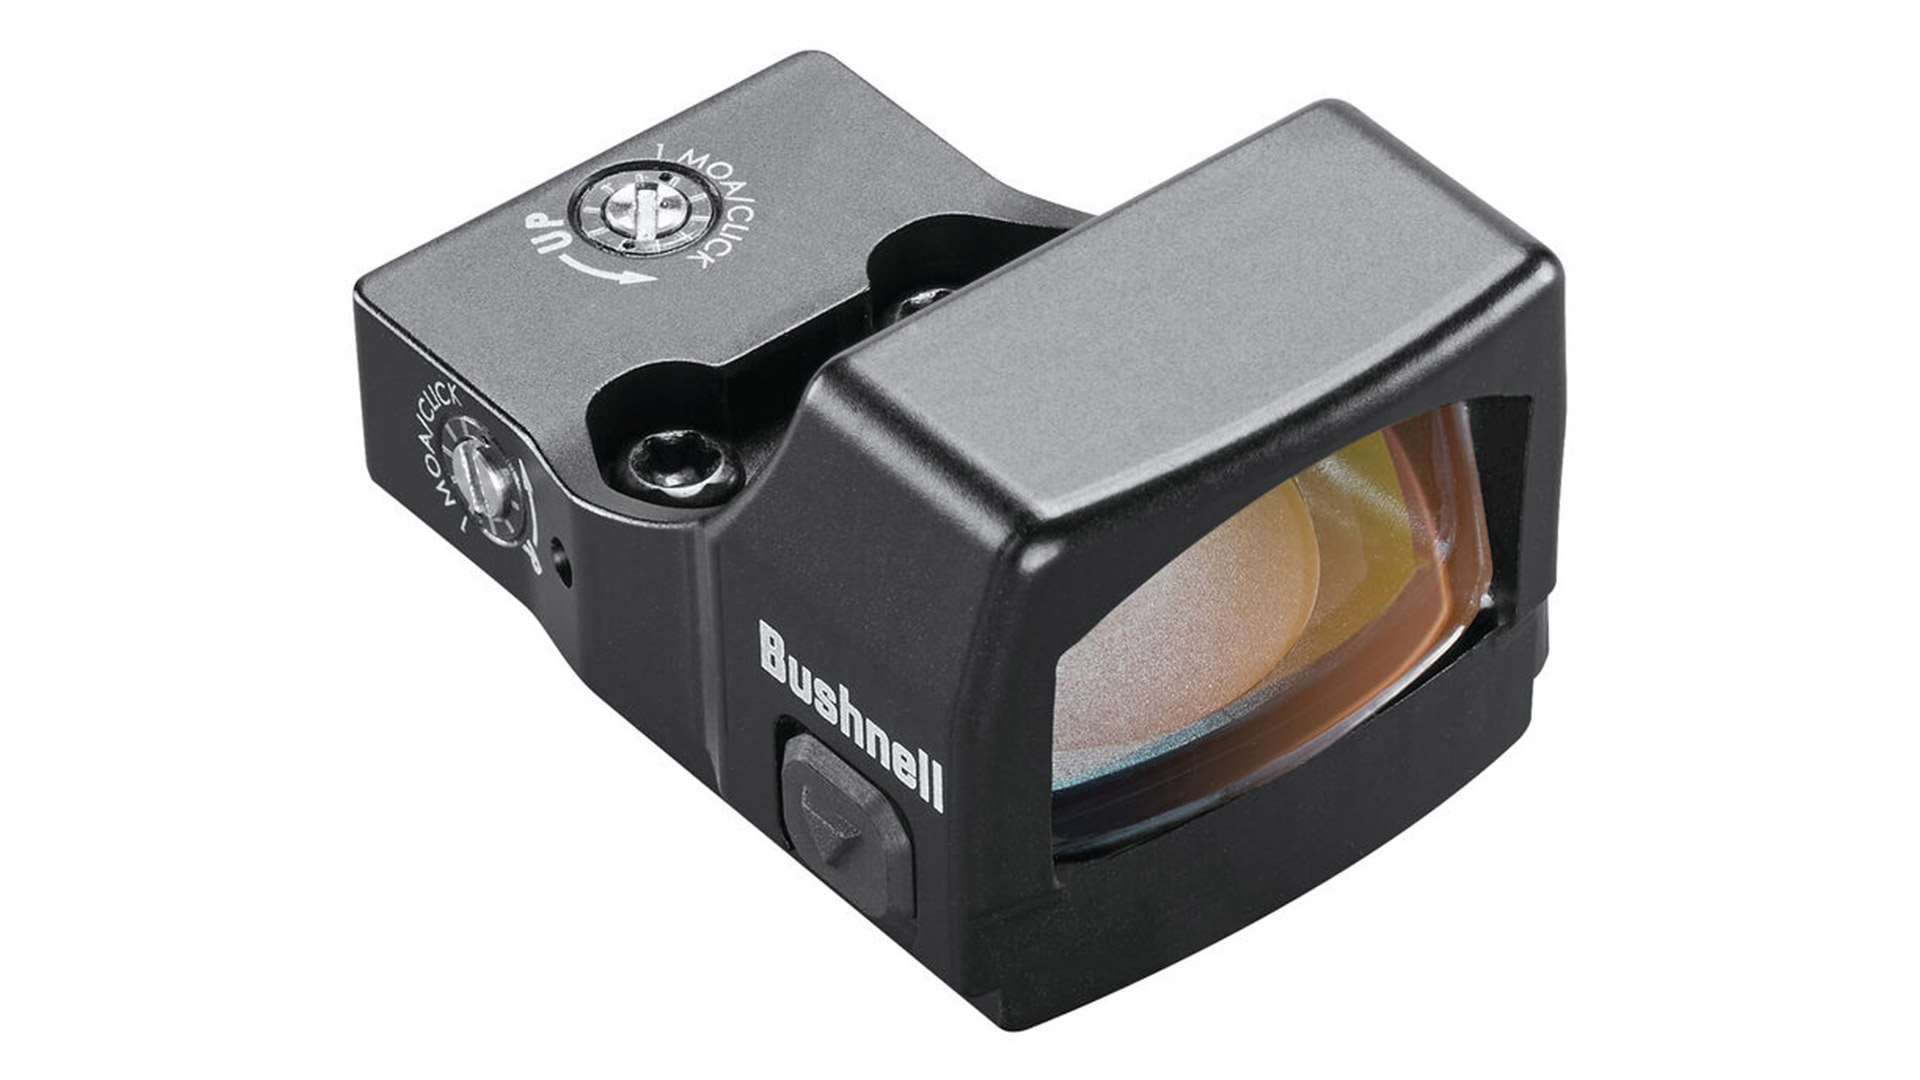 Bushnell RXS-250 Reflex Sight